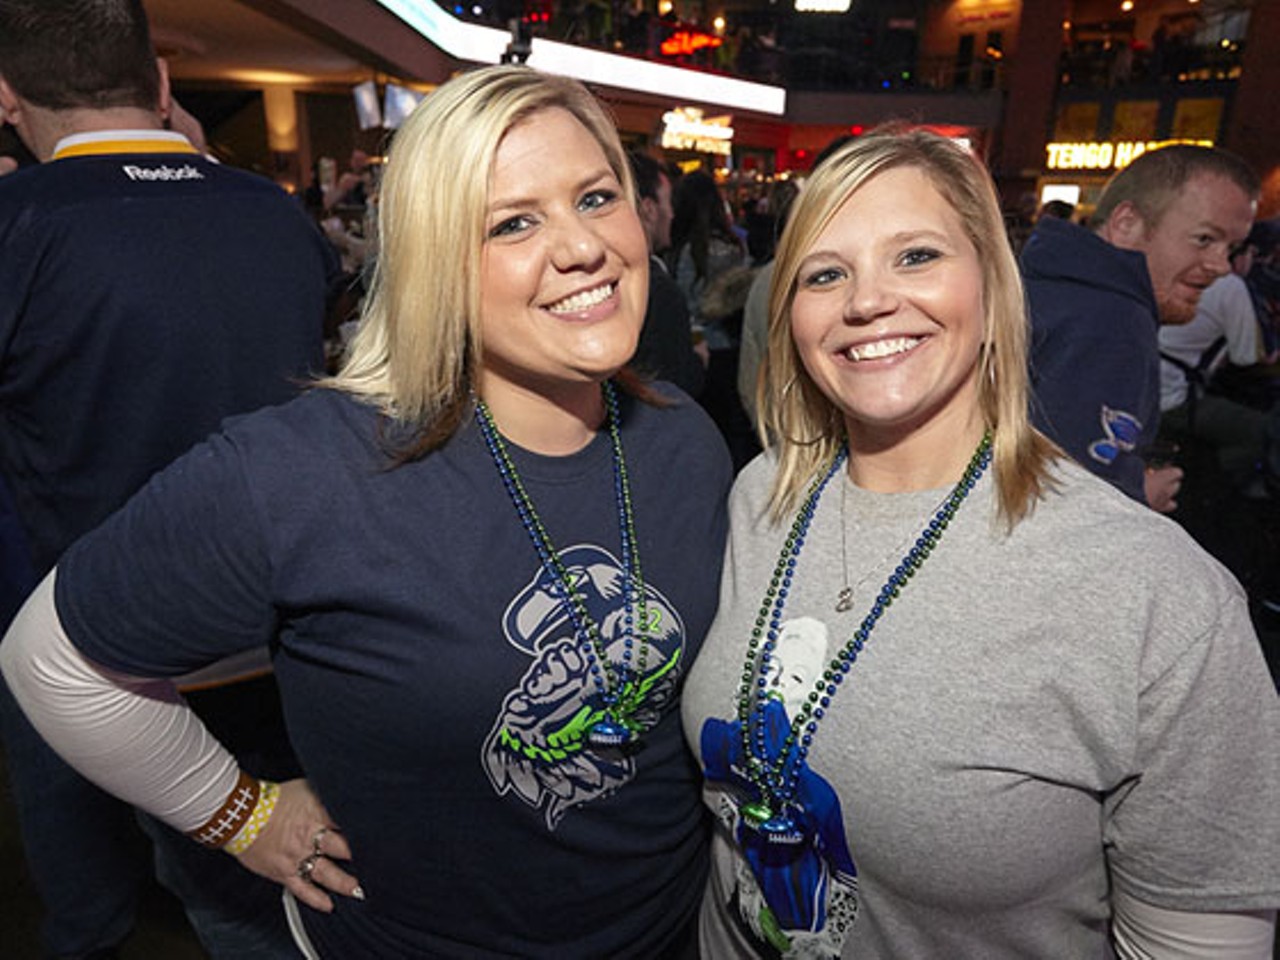 Liz Keeney and Mindi Hubbard supporting the Seahawks.